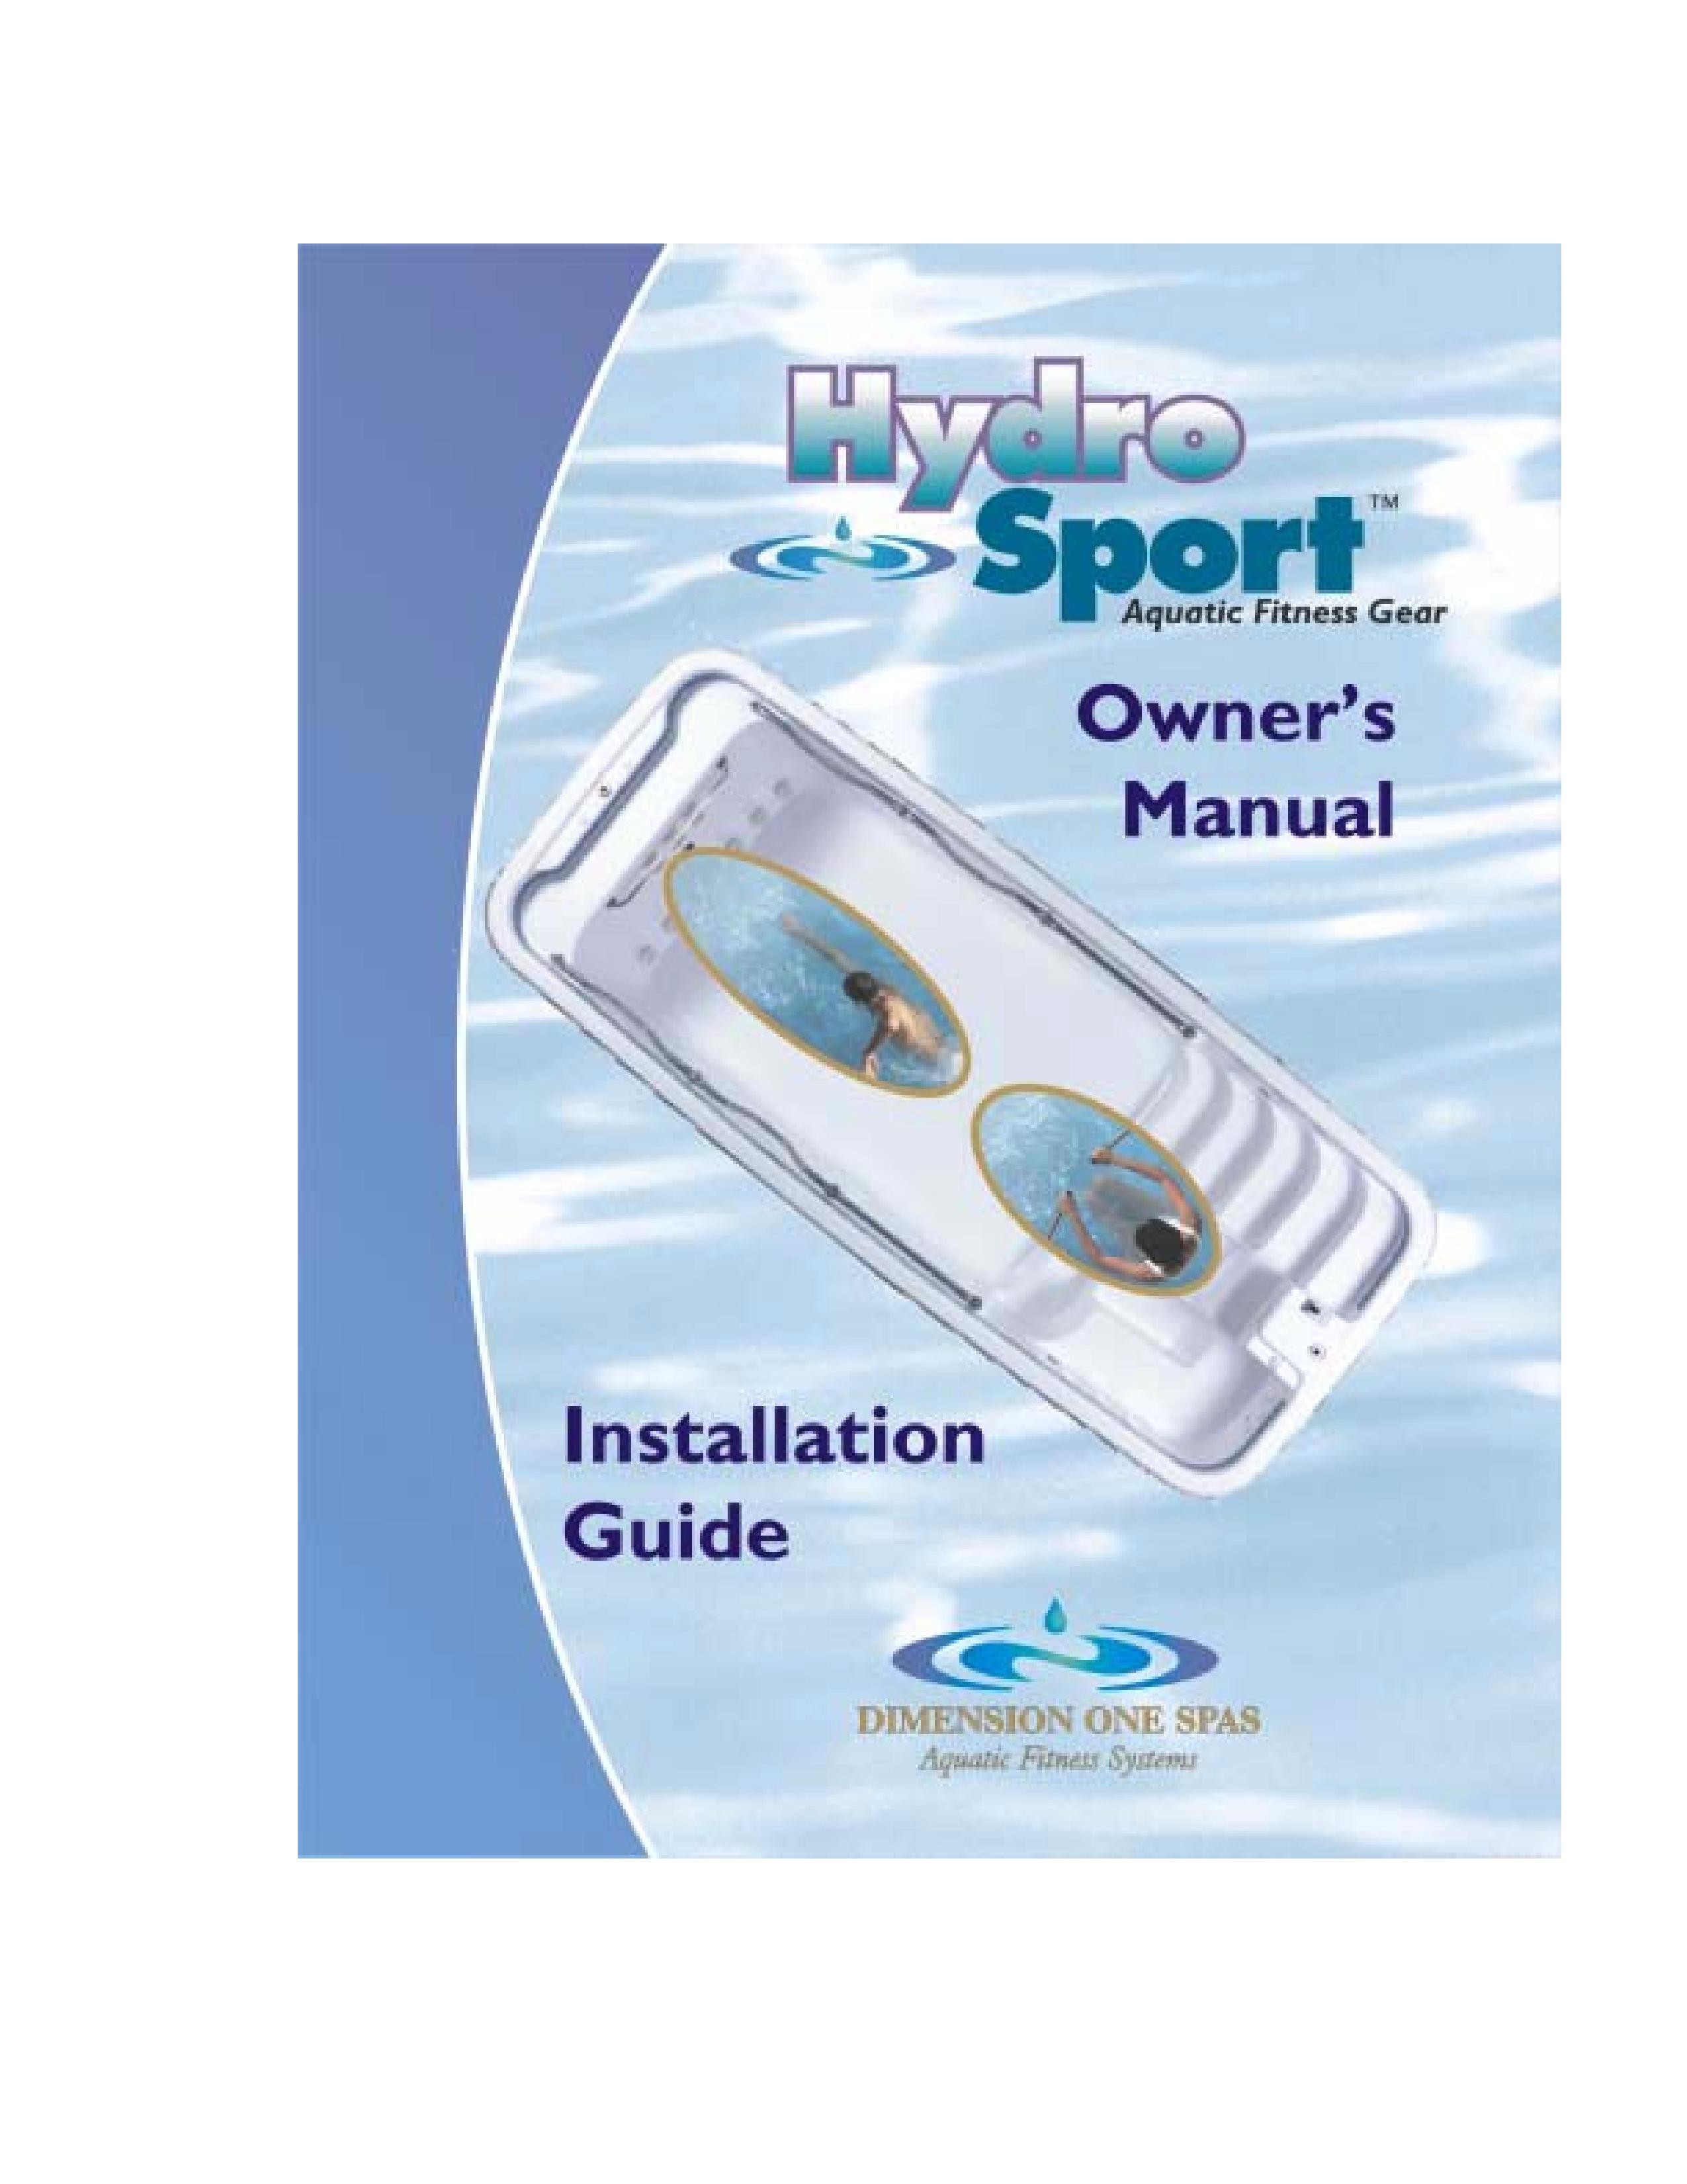 Dimension One Spas HYDRO SPORT Hot Tub User Manual